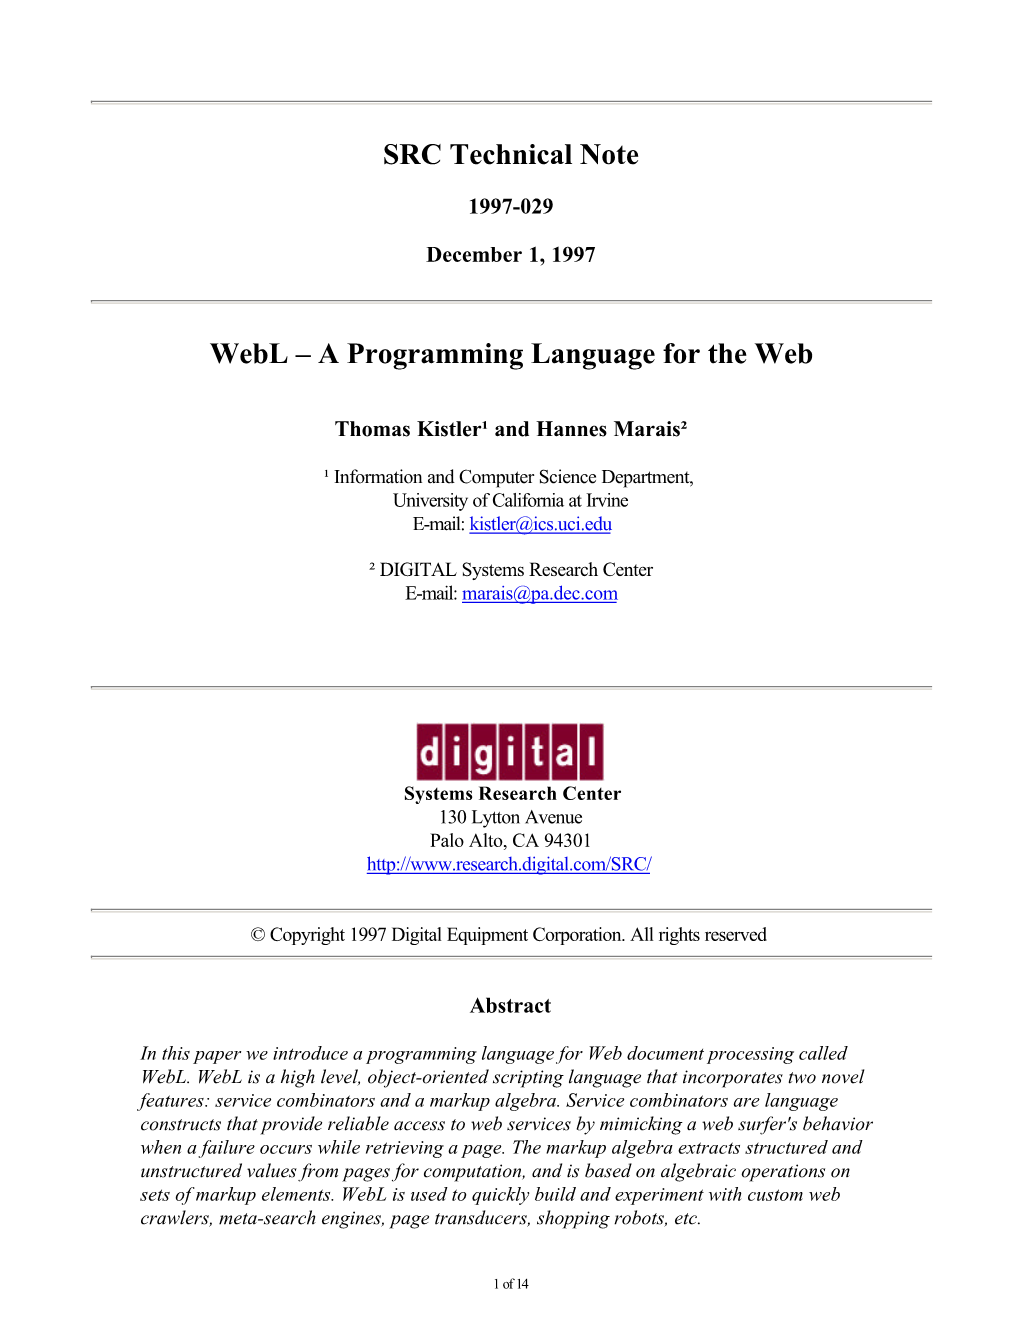 Webl – a Programming Language for the Web